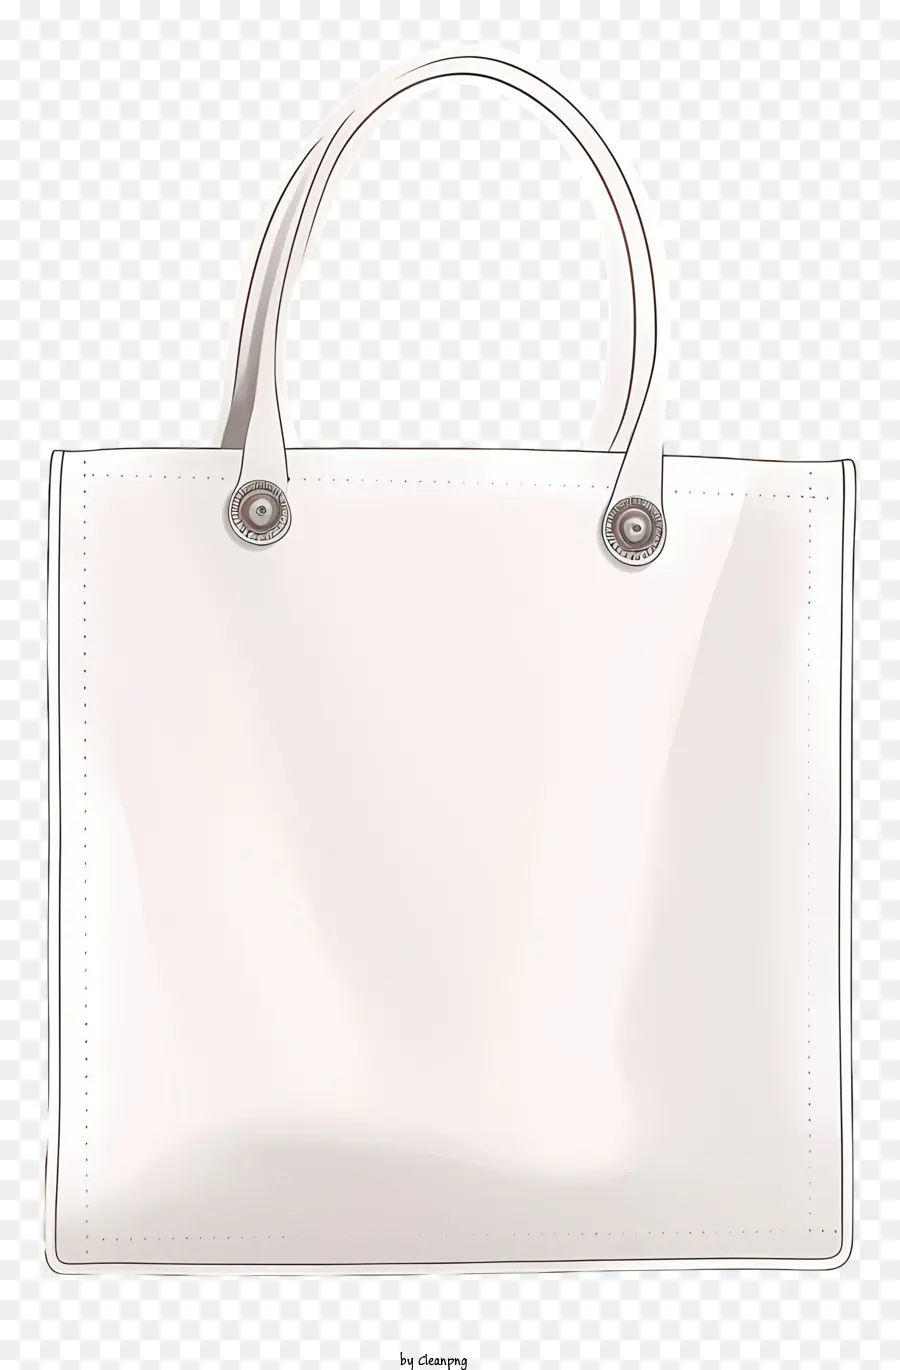 white handbag long strap metal buckle closure zipper pocket fabric lining